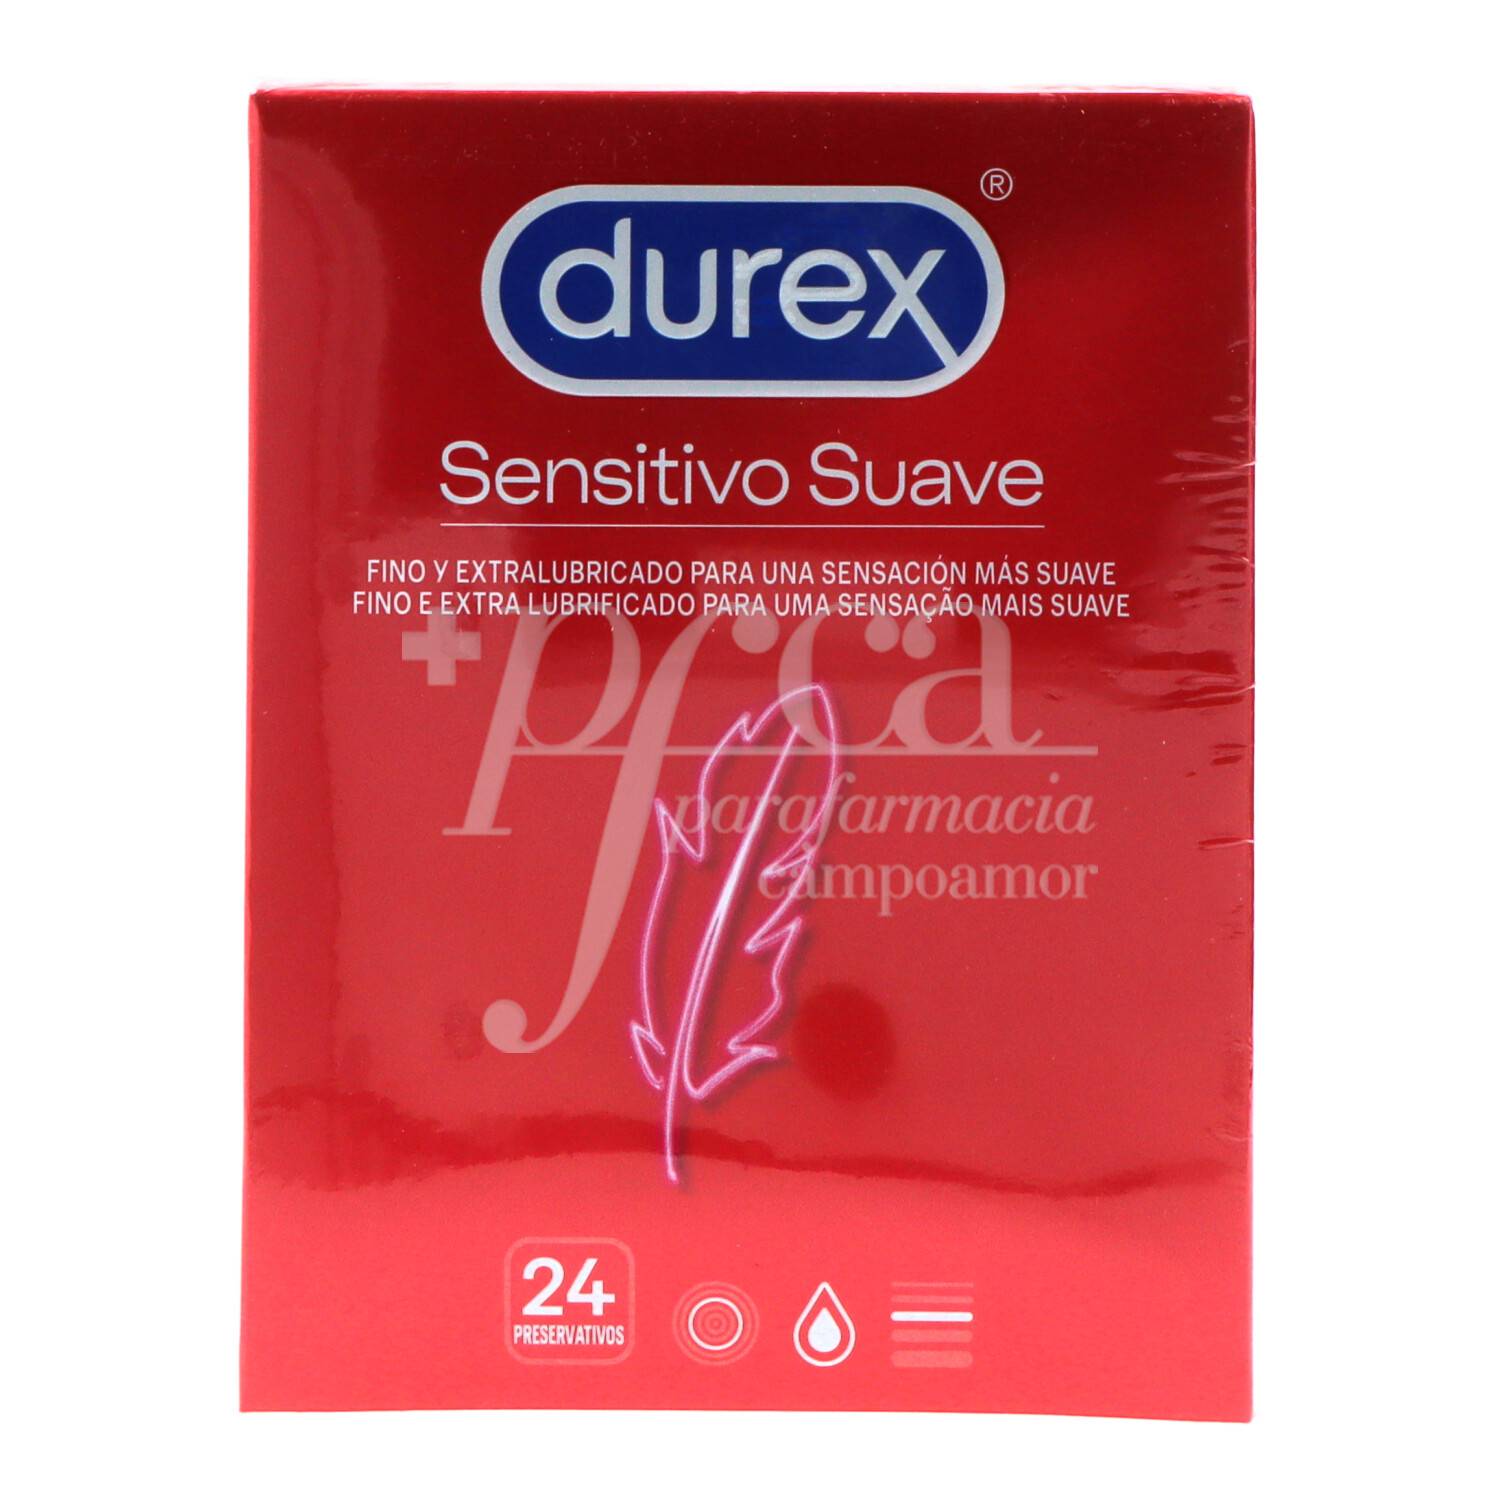 Detail Durex Condoms Images Nomer 18